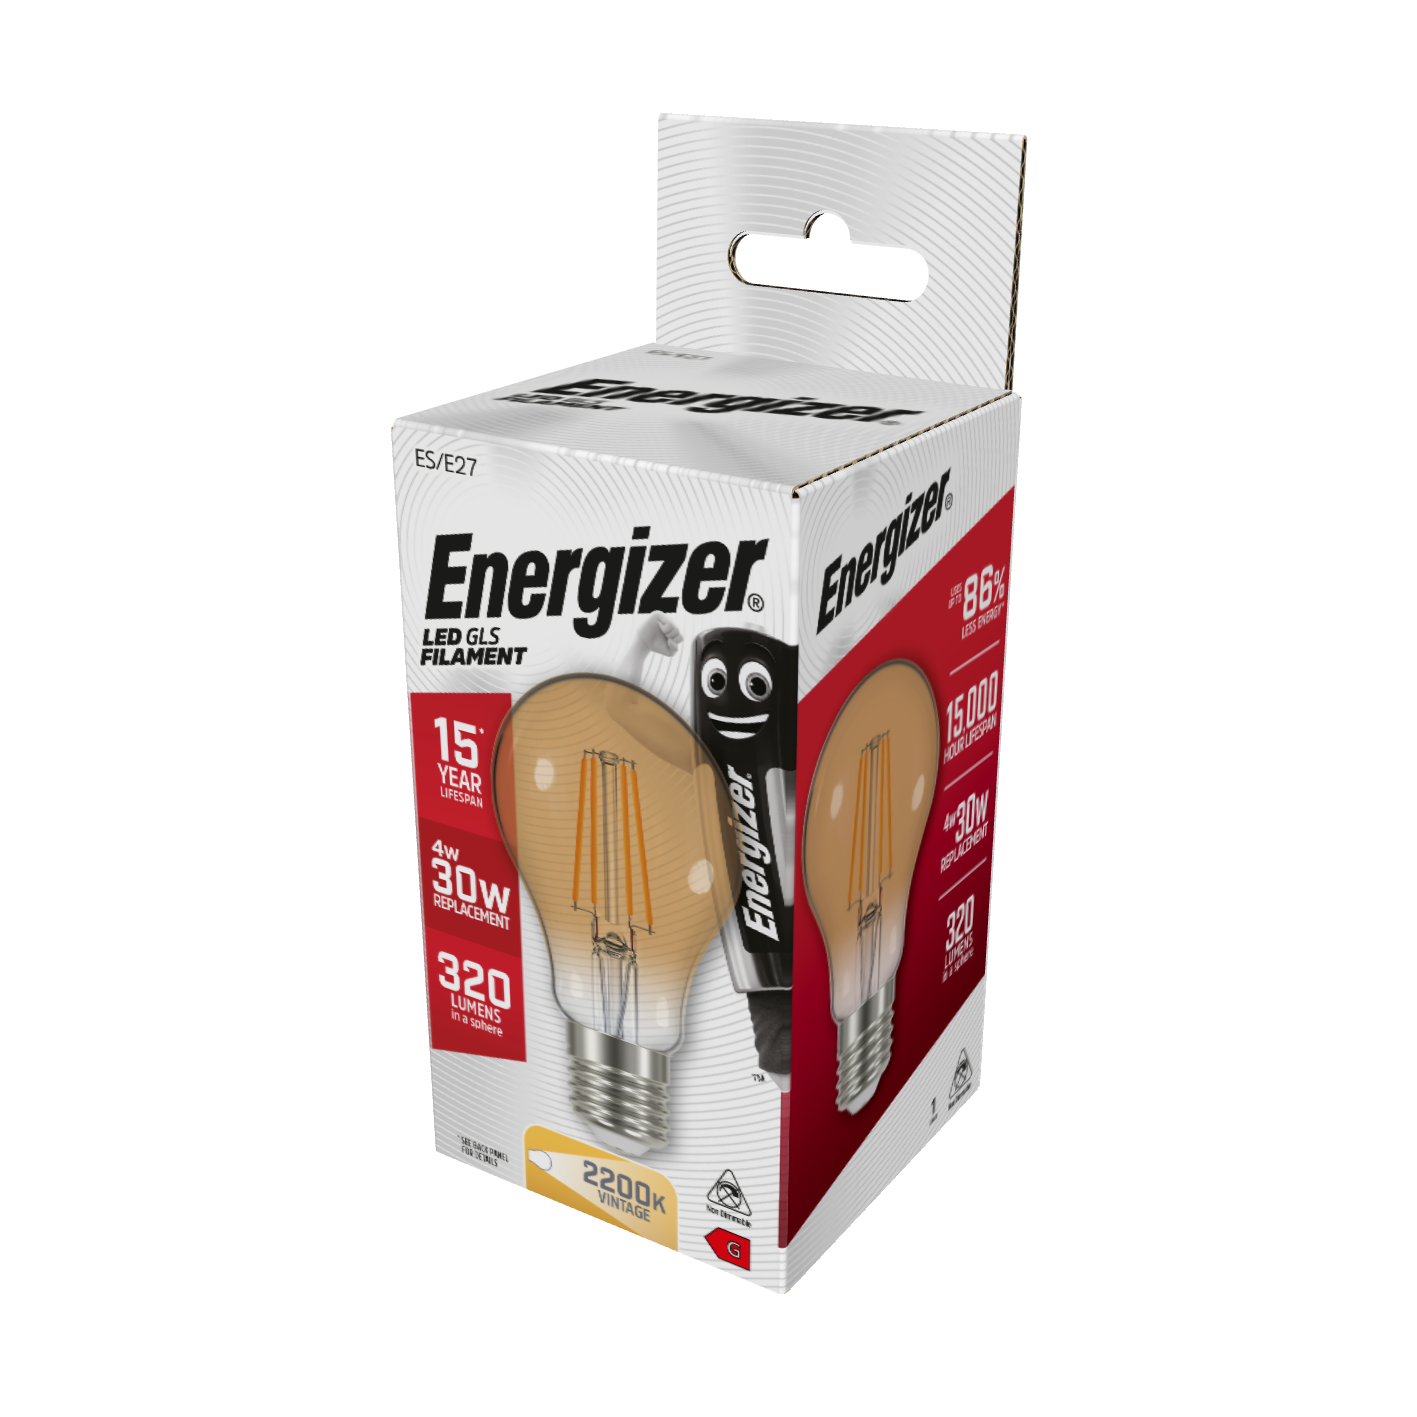 Energizer LED Filament Gold GLS E27 (ES) 320lm 4W 2,200K (Warm White), Box of 1